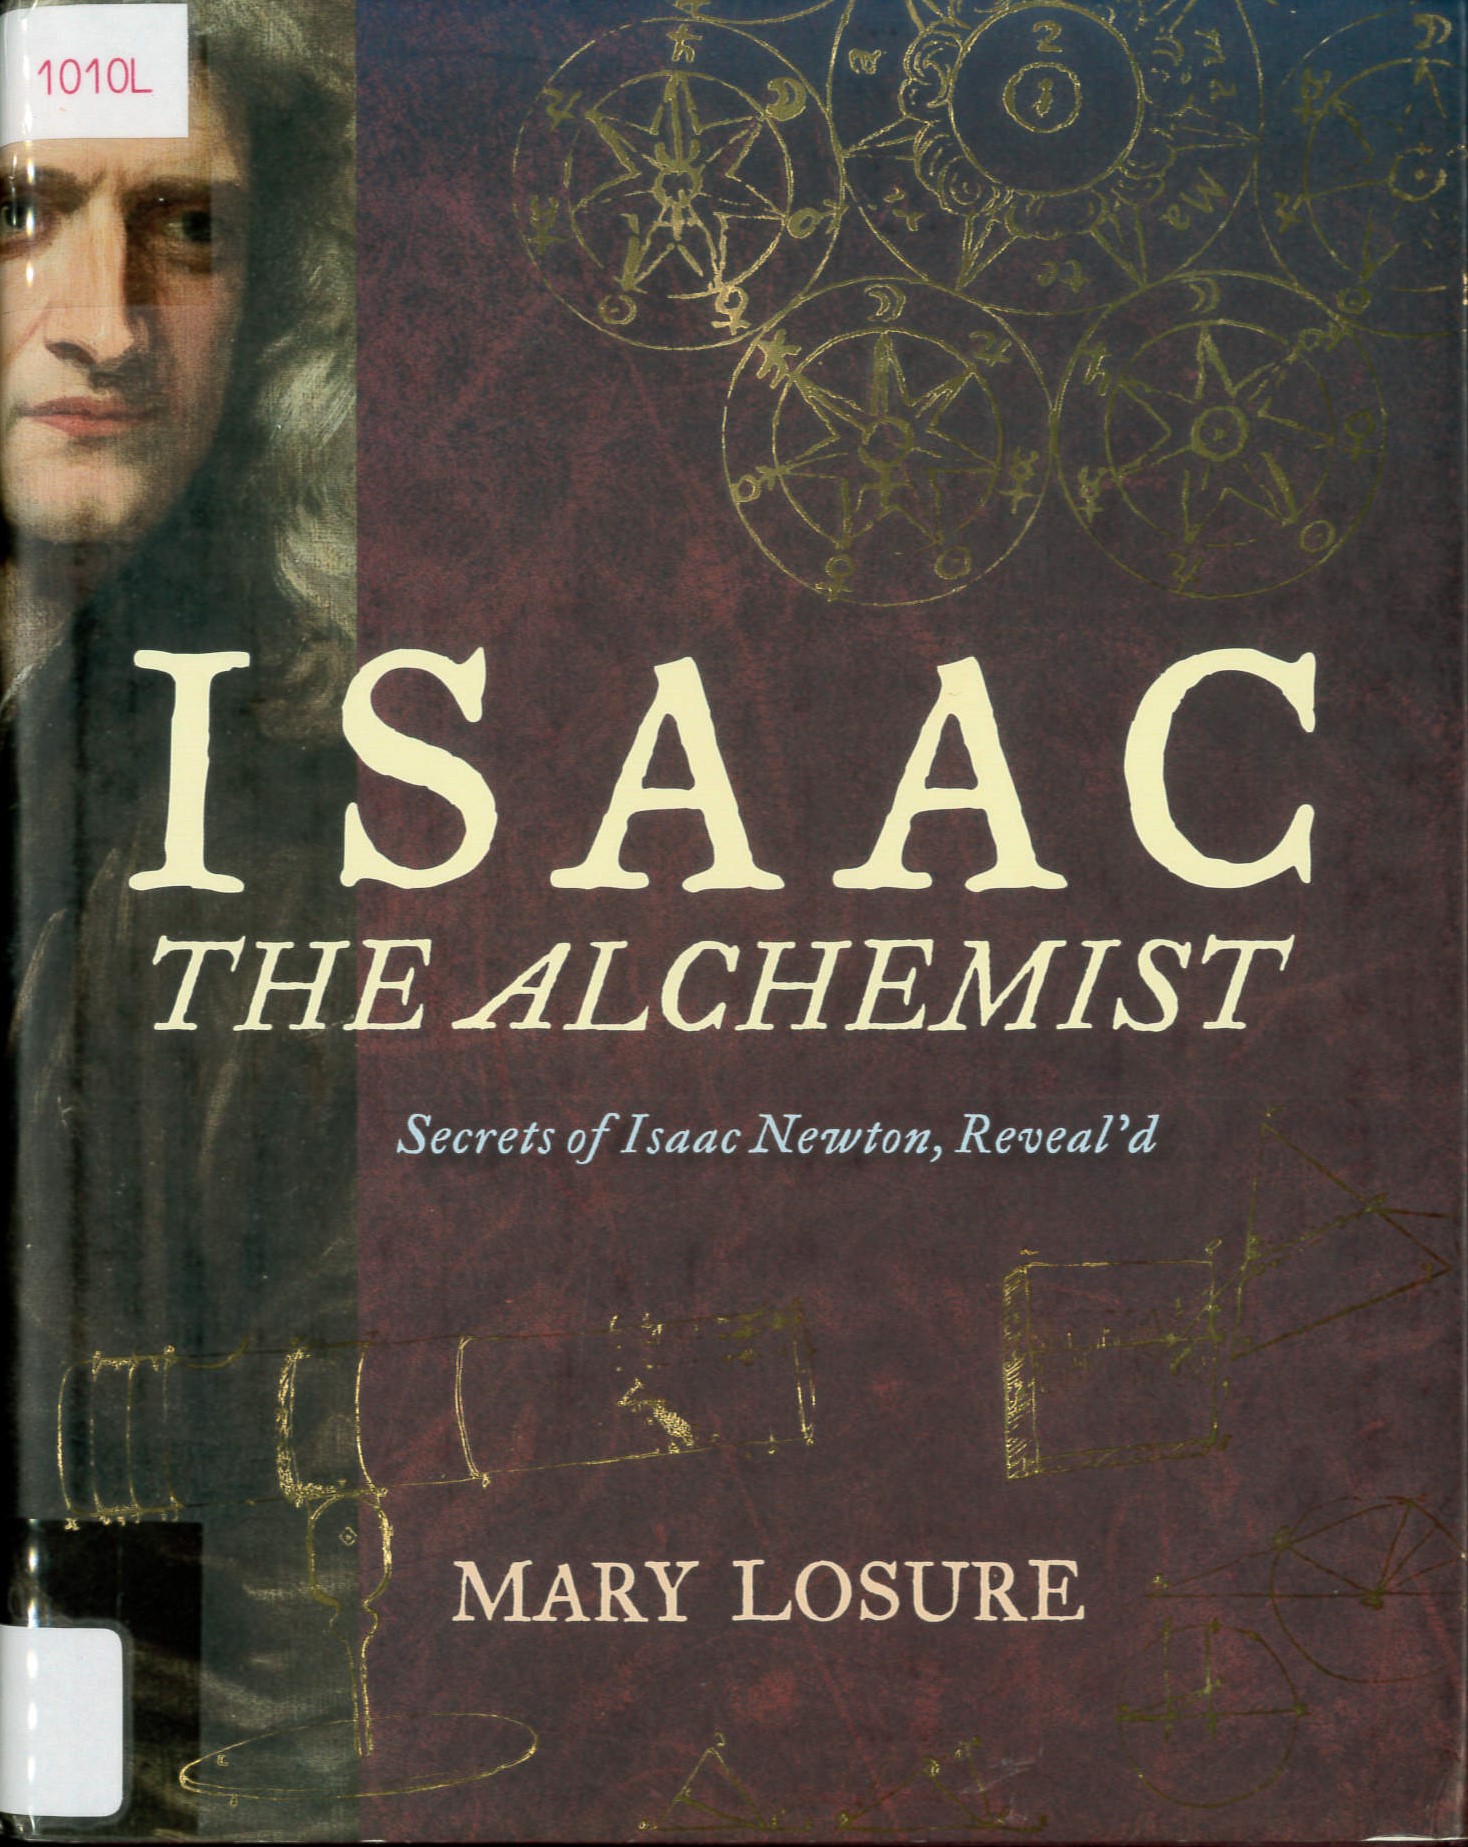 Isaac the alchemist : secrets of Isaac Newton, reveal